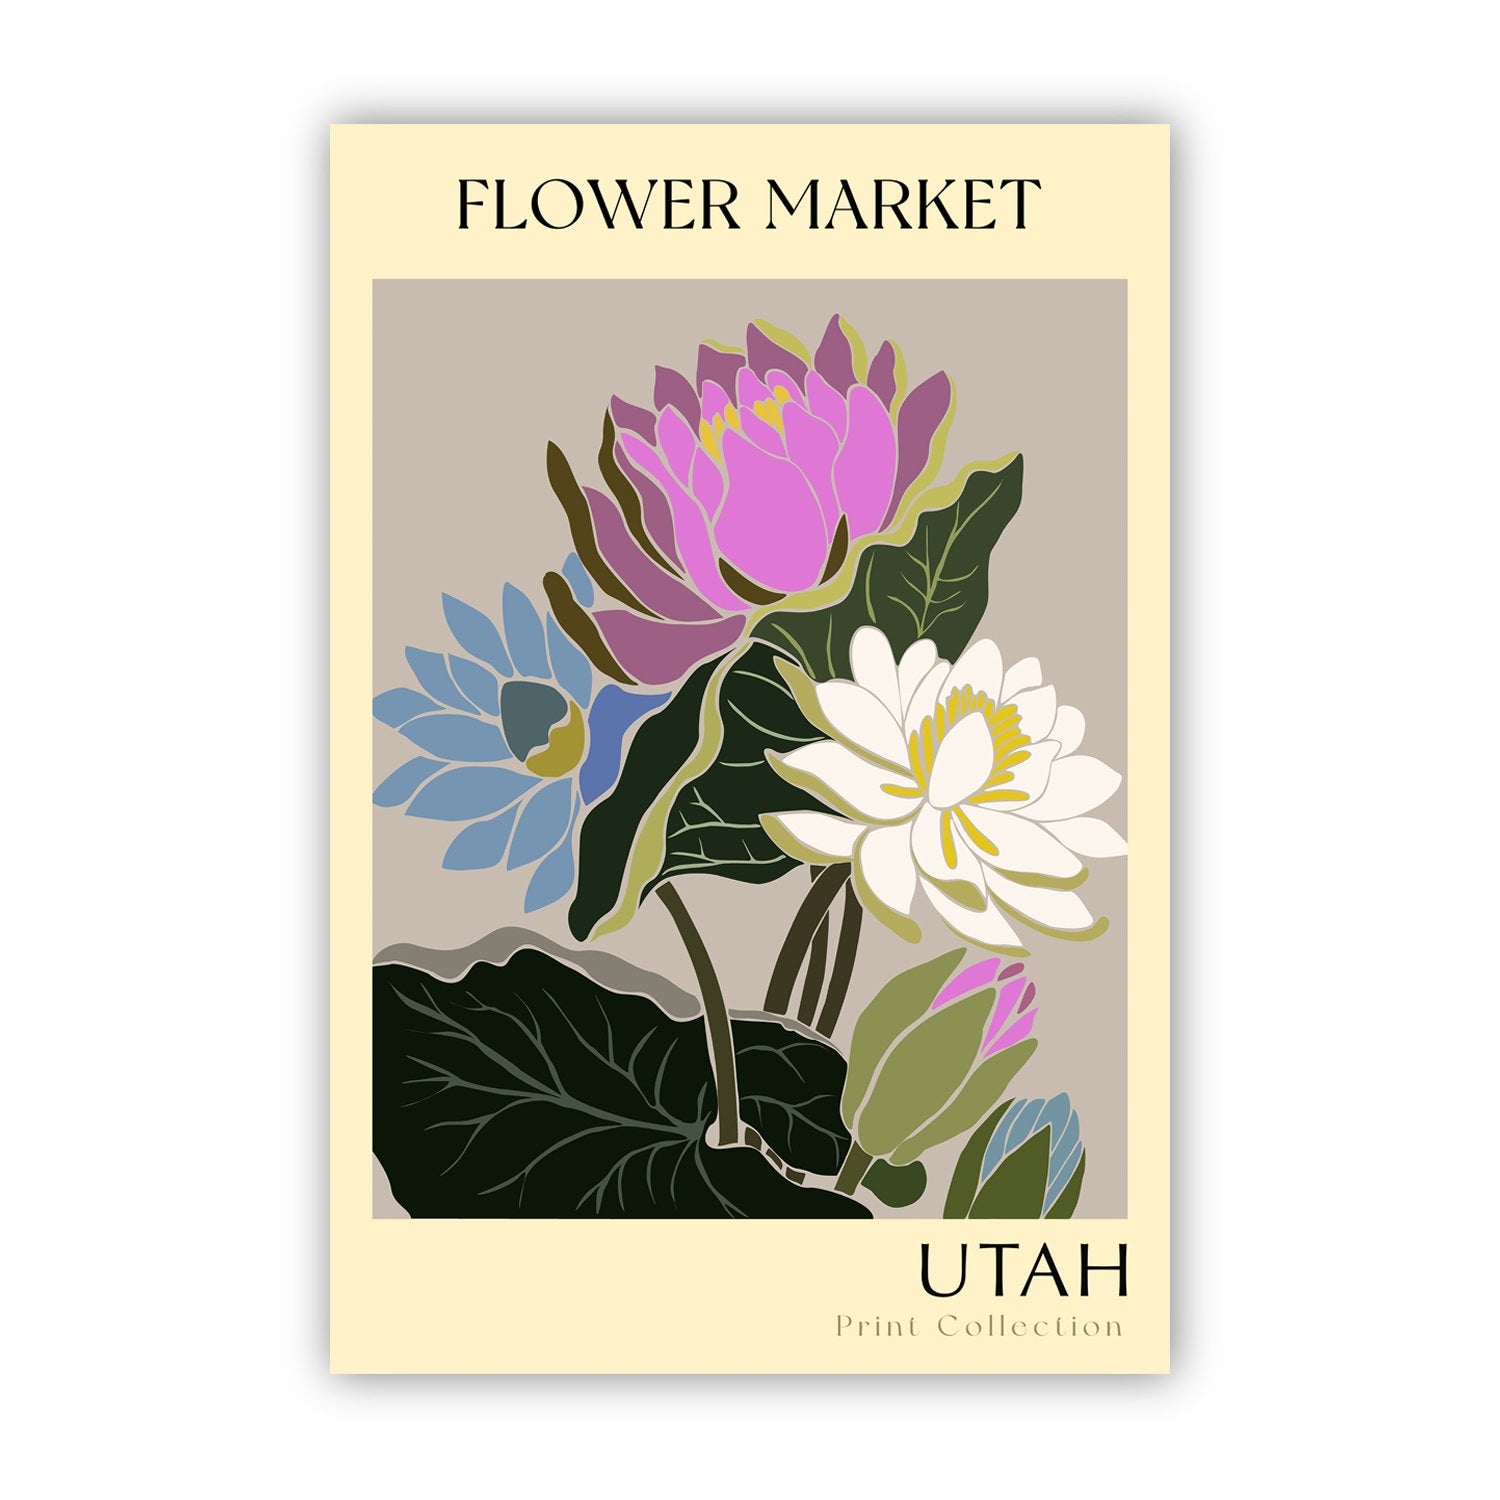 Utah State flower print, USA states poster, Utah flower market poster, Botanical poster, Nature poster artwork, Boho floral wall art